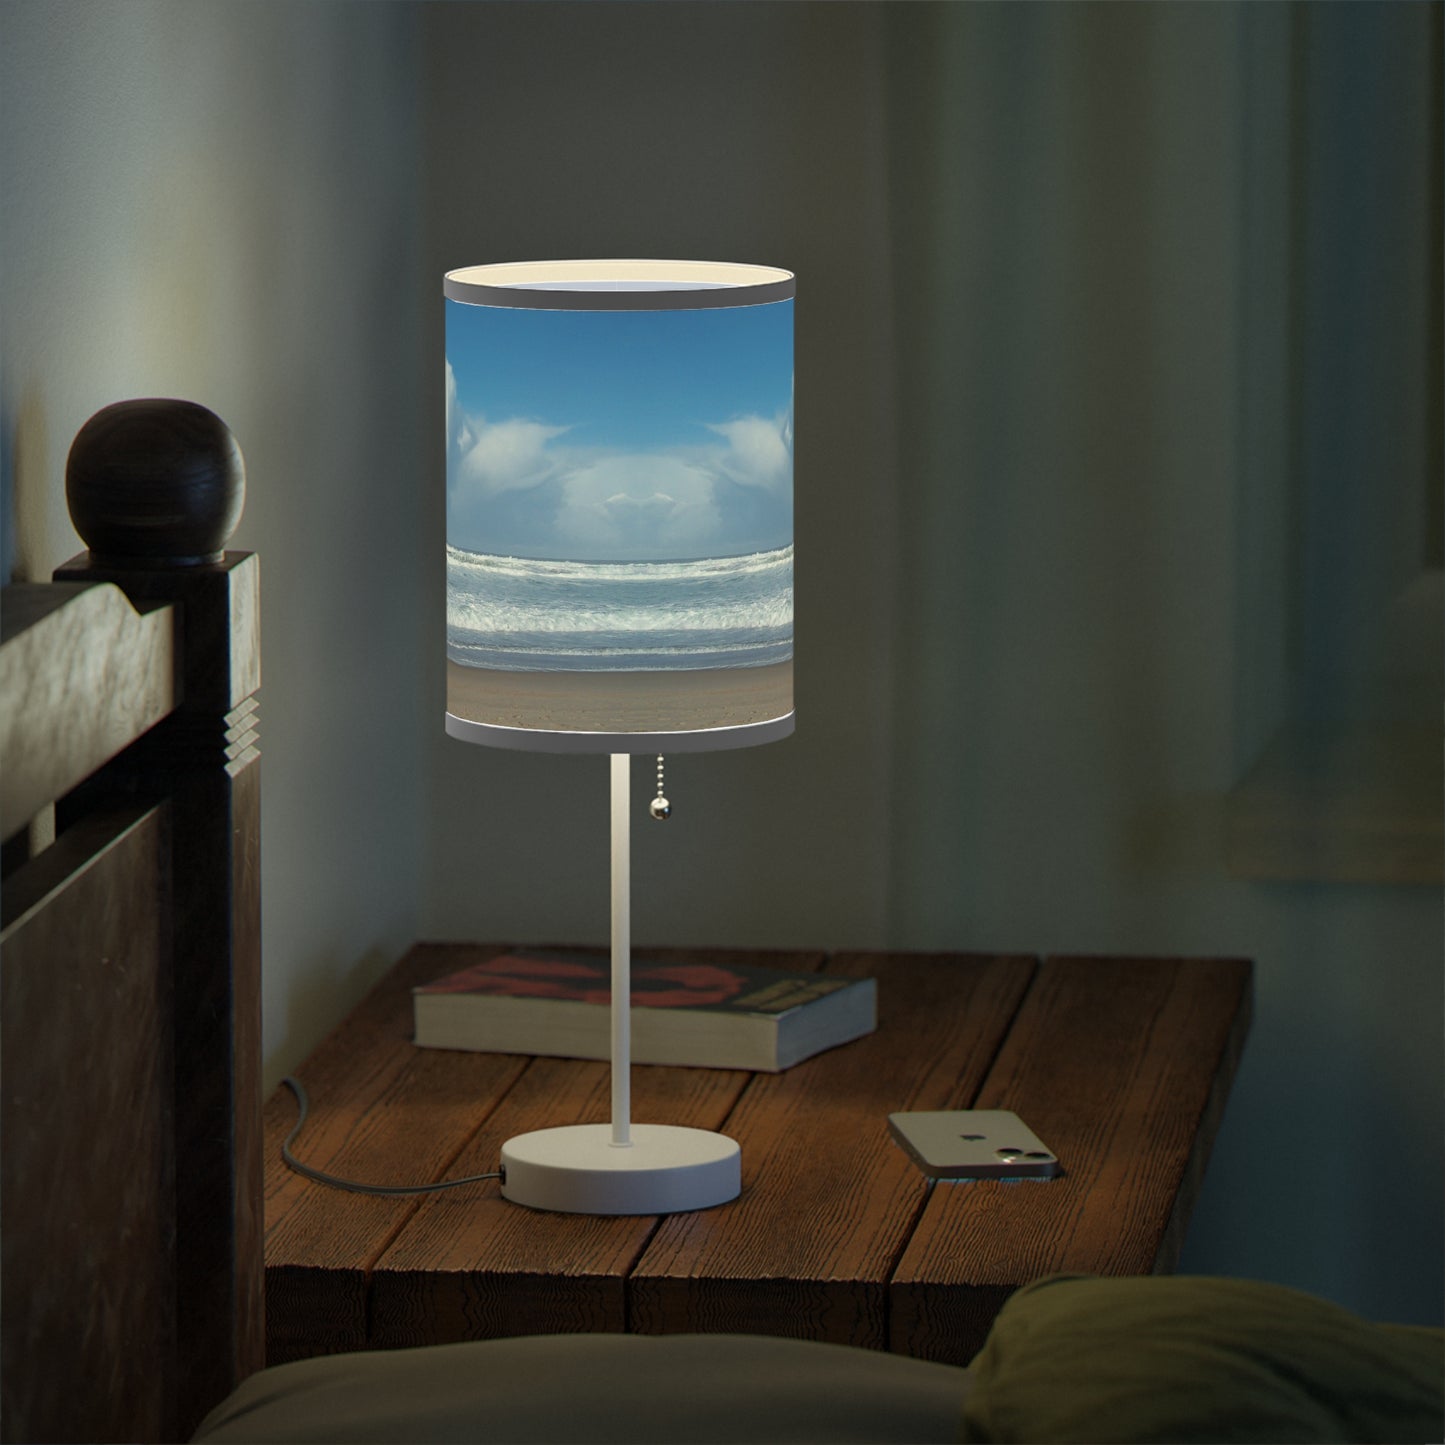 Blue Sky Beach Lamp on a Stand